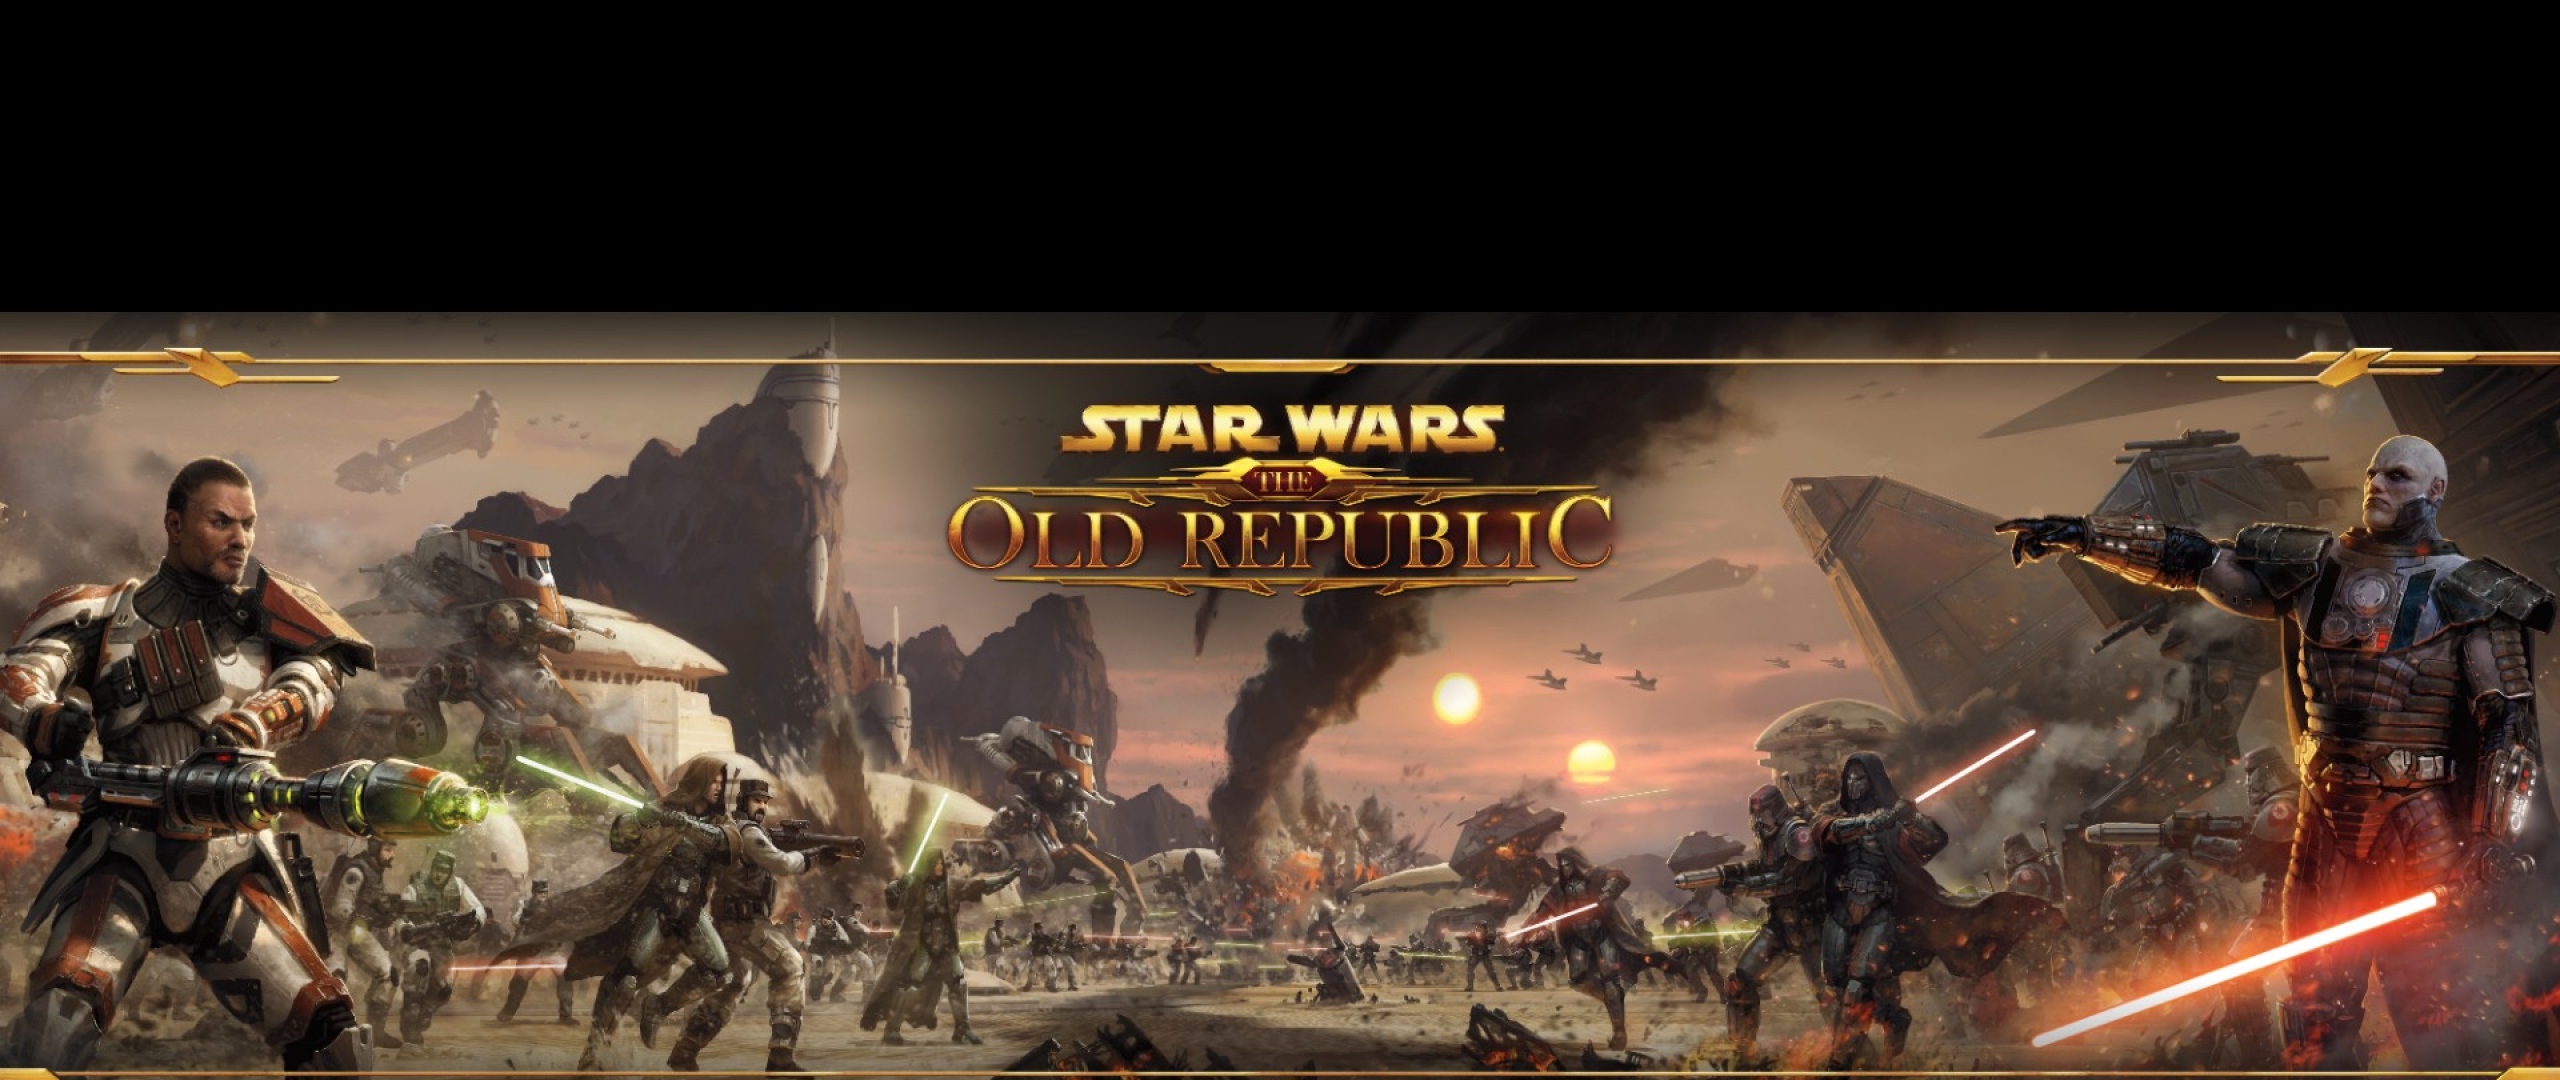 Star Wars The Old Republic Battle Gun Lightsabers Game